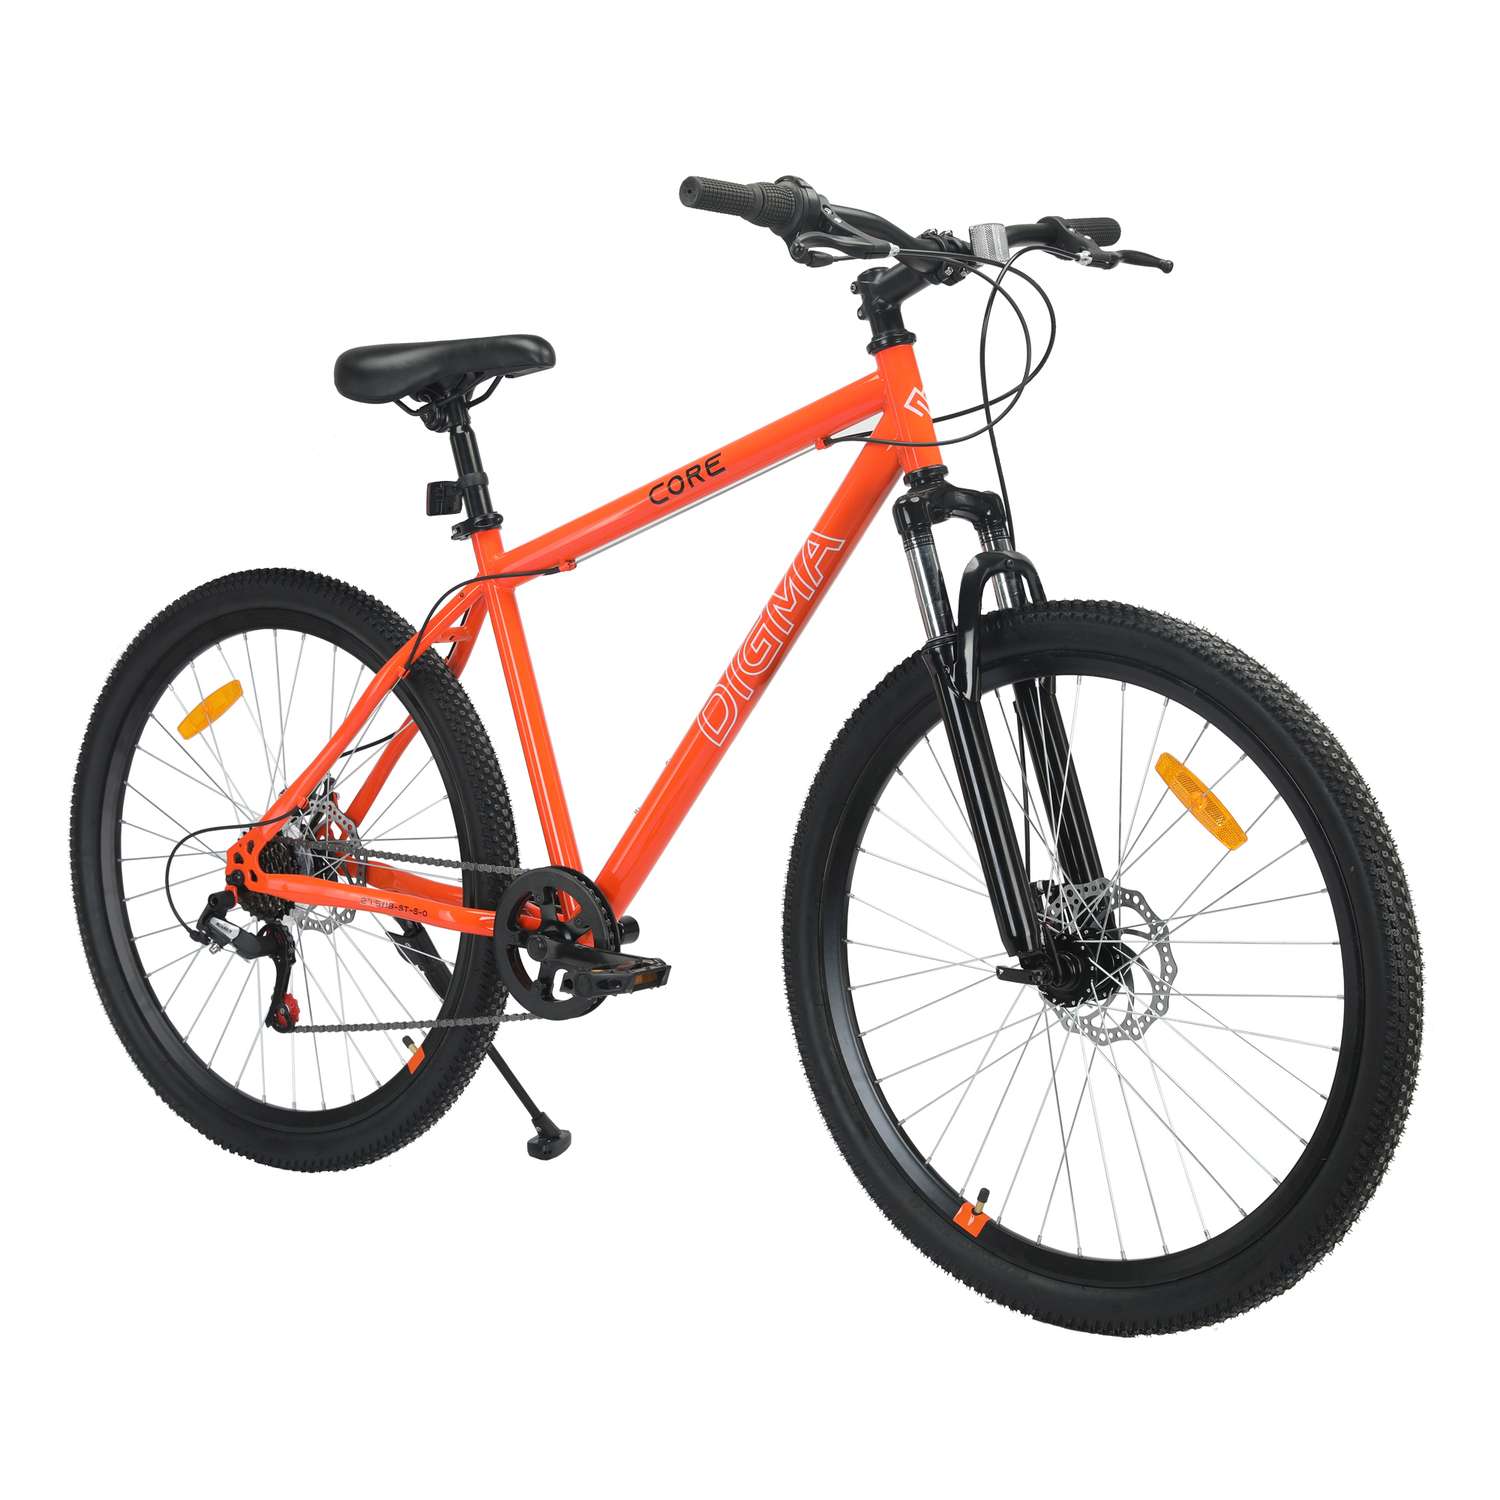 Велосипед Digma Core оранжевый - фото 6